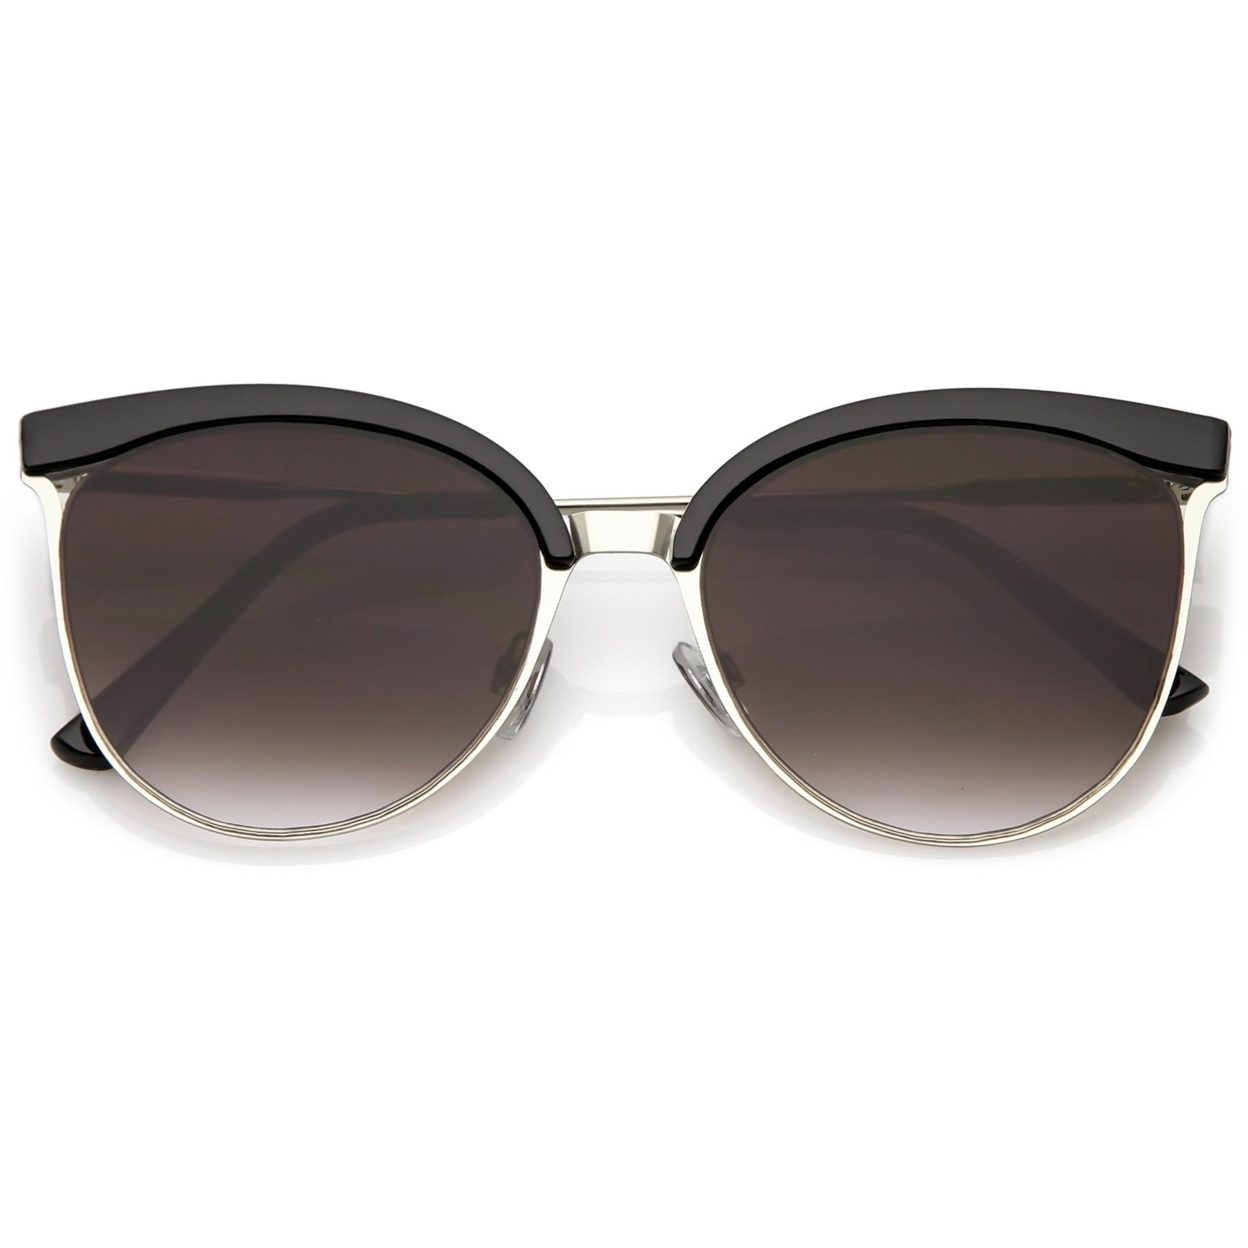 Modern Semi Rimless Cat Eye Sunglasses Cutout Slim Arms Flat Lens 55mm - Green Pink Silver / Lavender